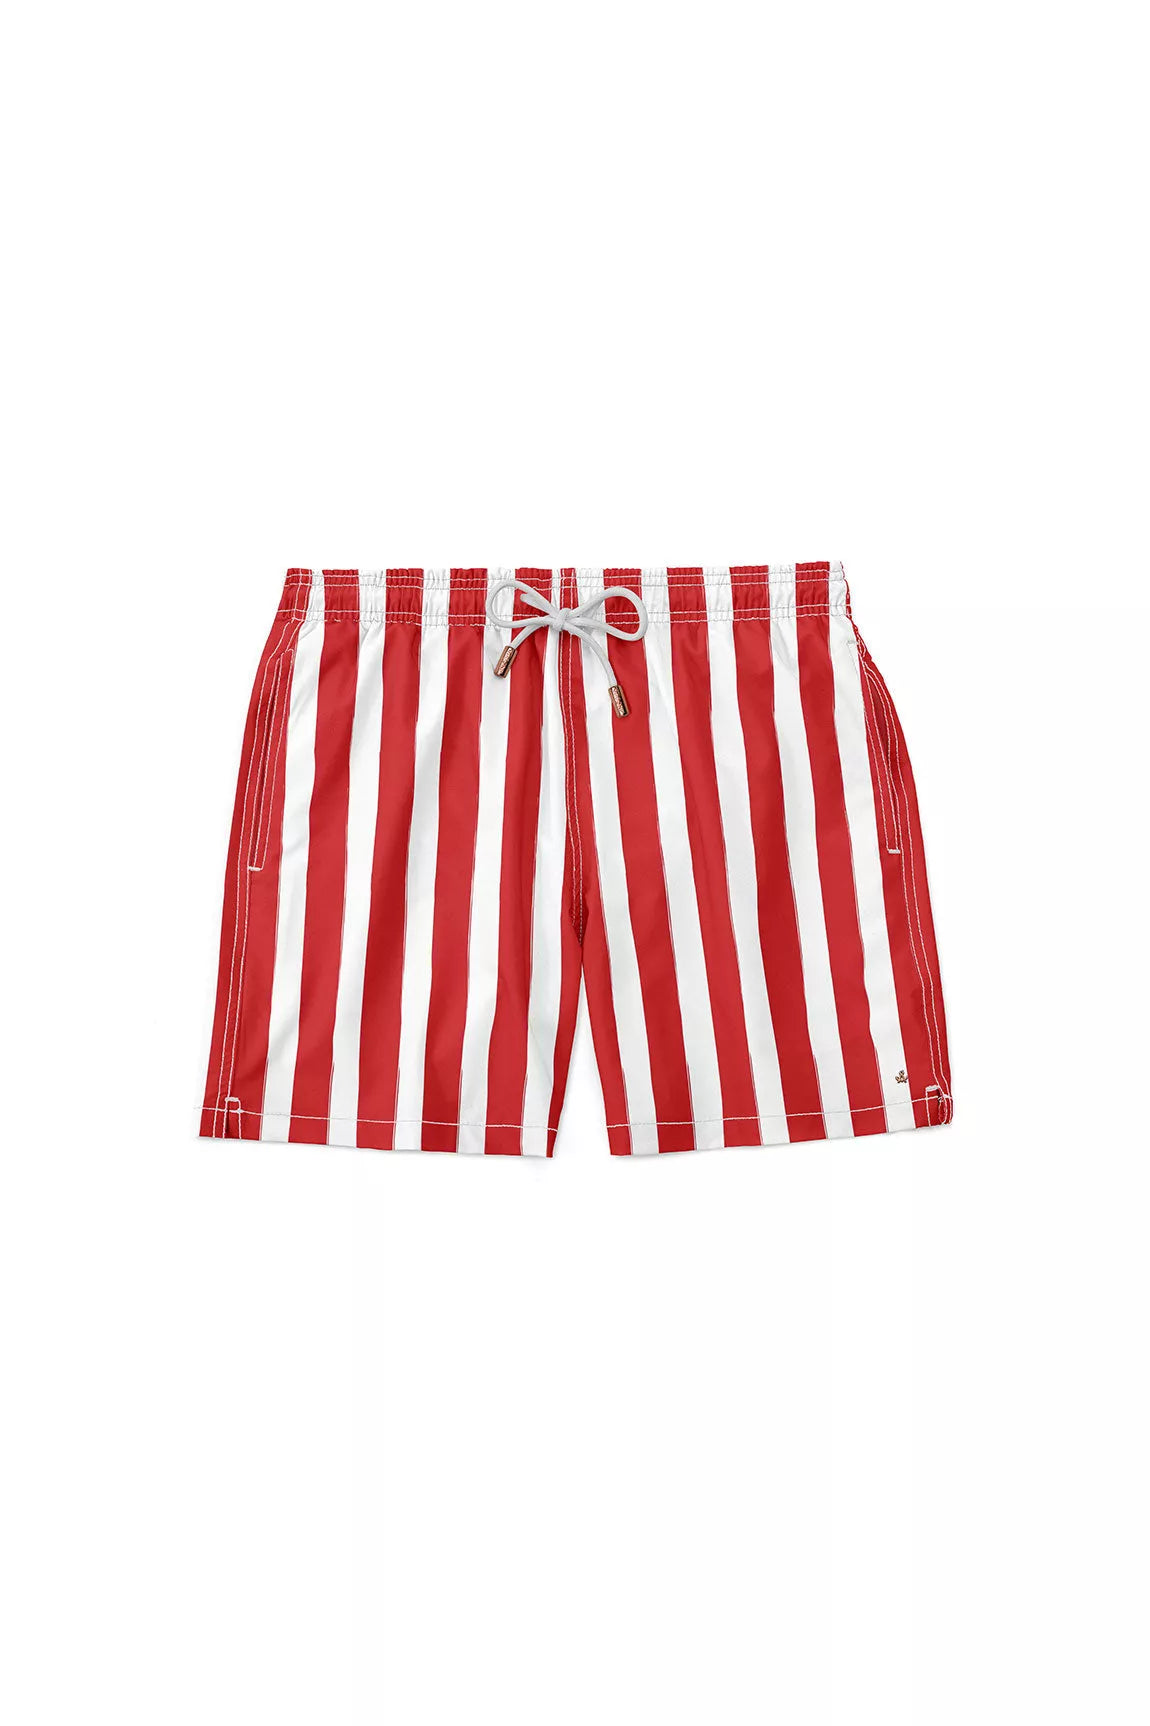 Pantaloneta Tub and Stripes Hot Red